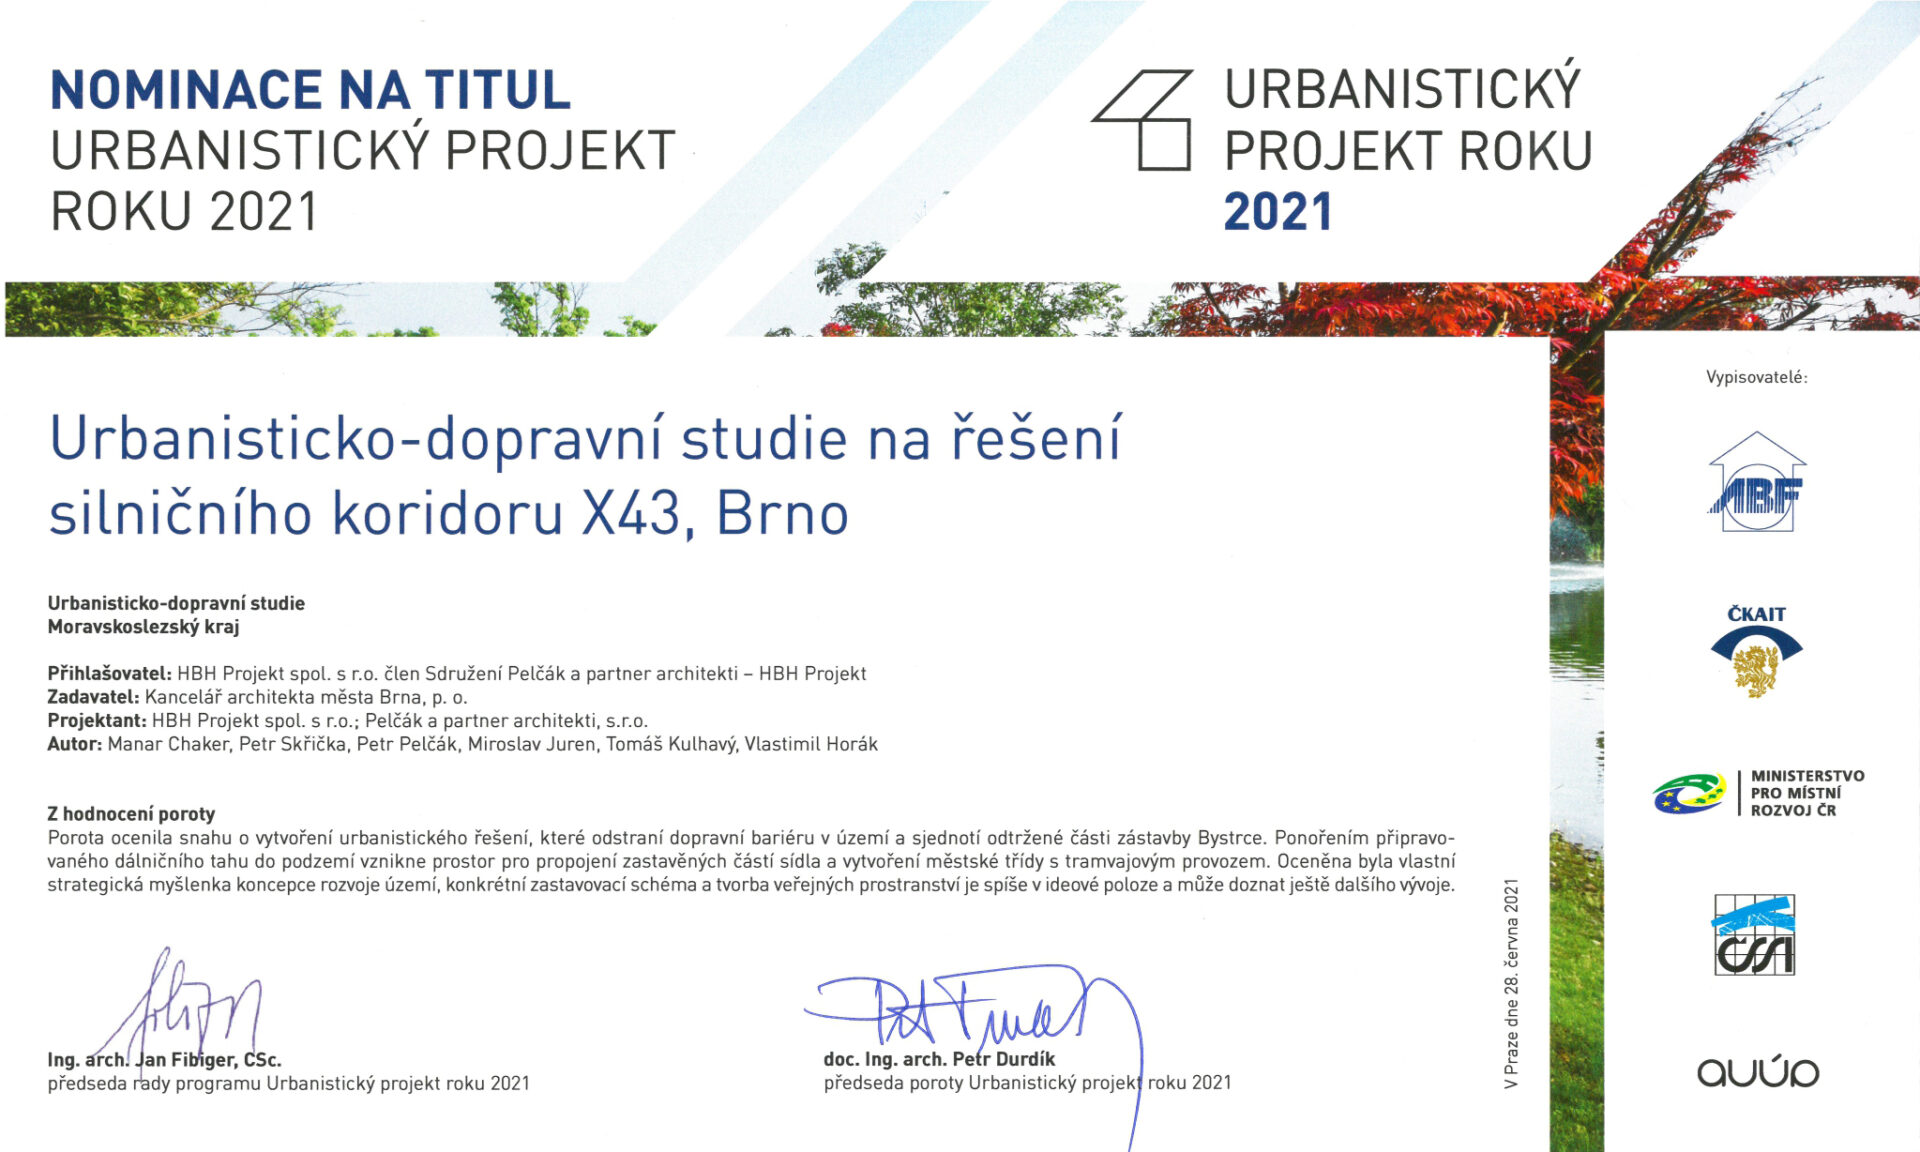 Silniční koridor X43 obdržel cenu – Urbanistický projekt roku 2021